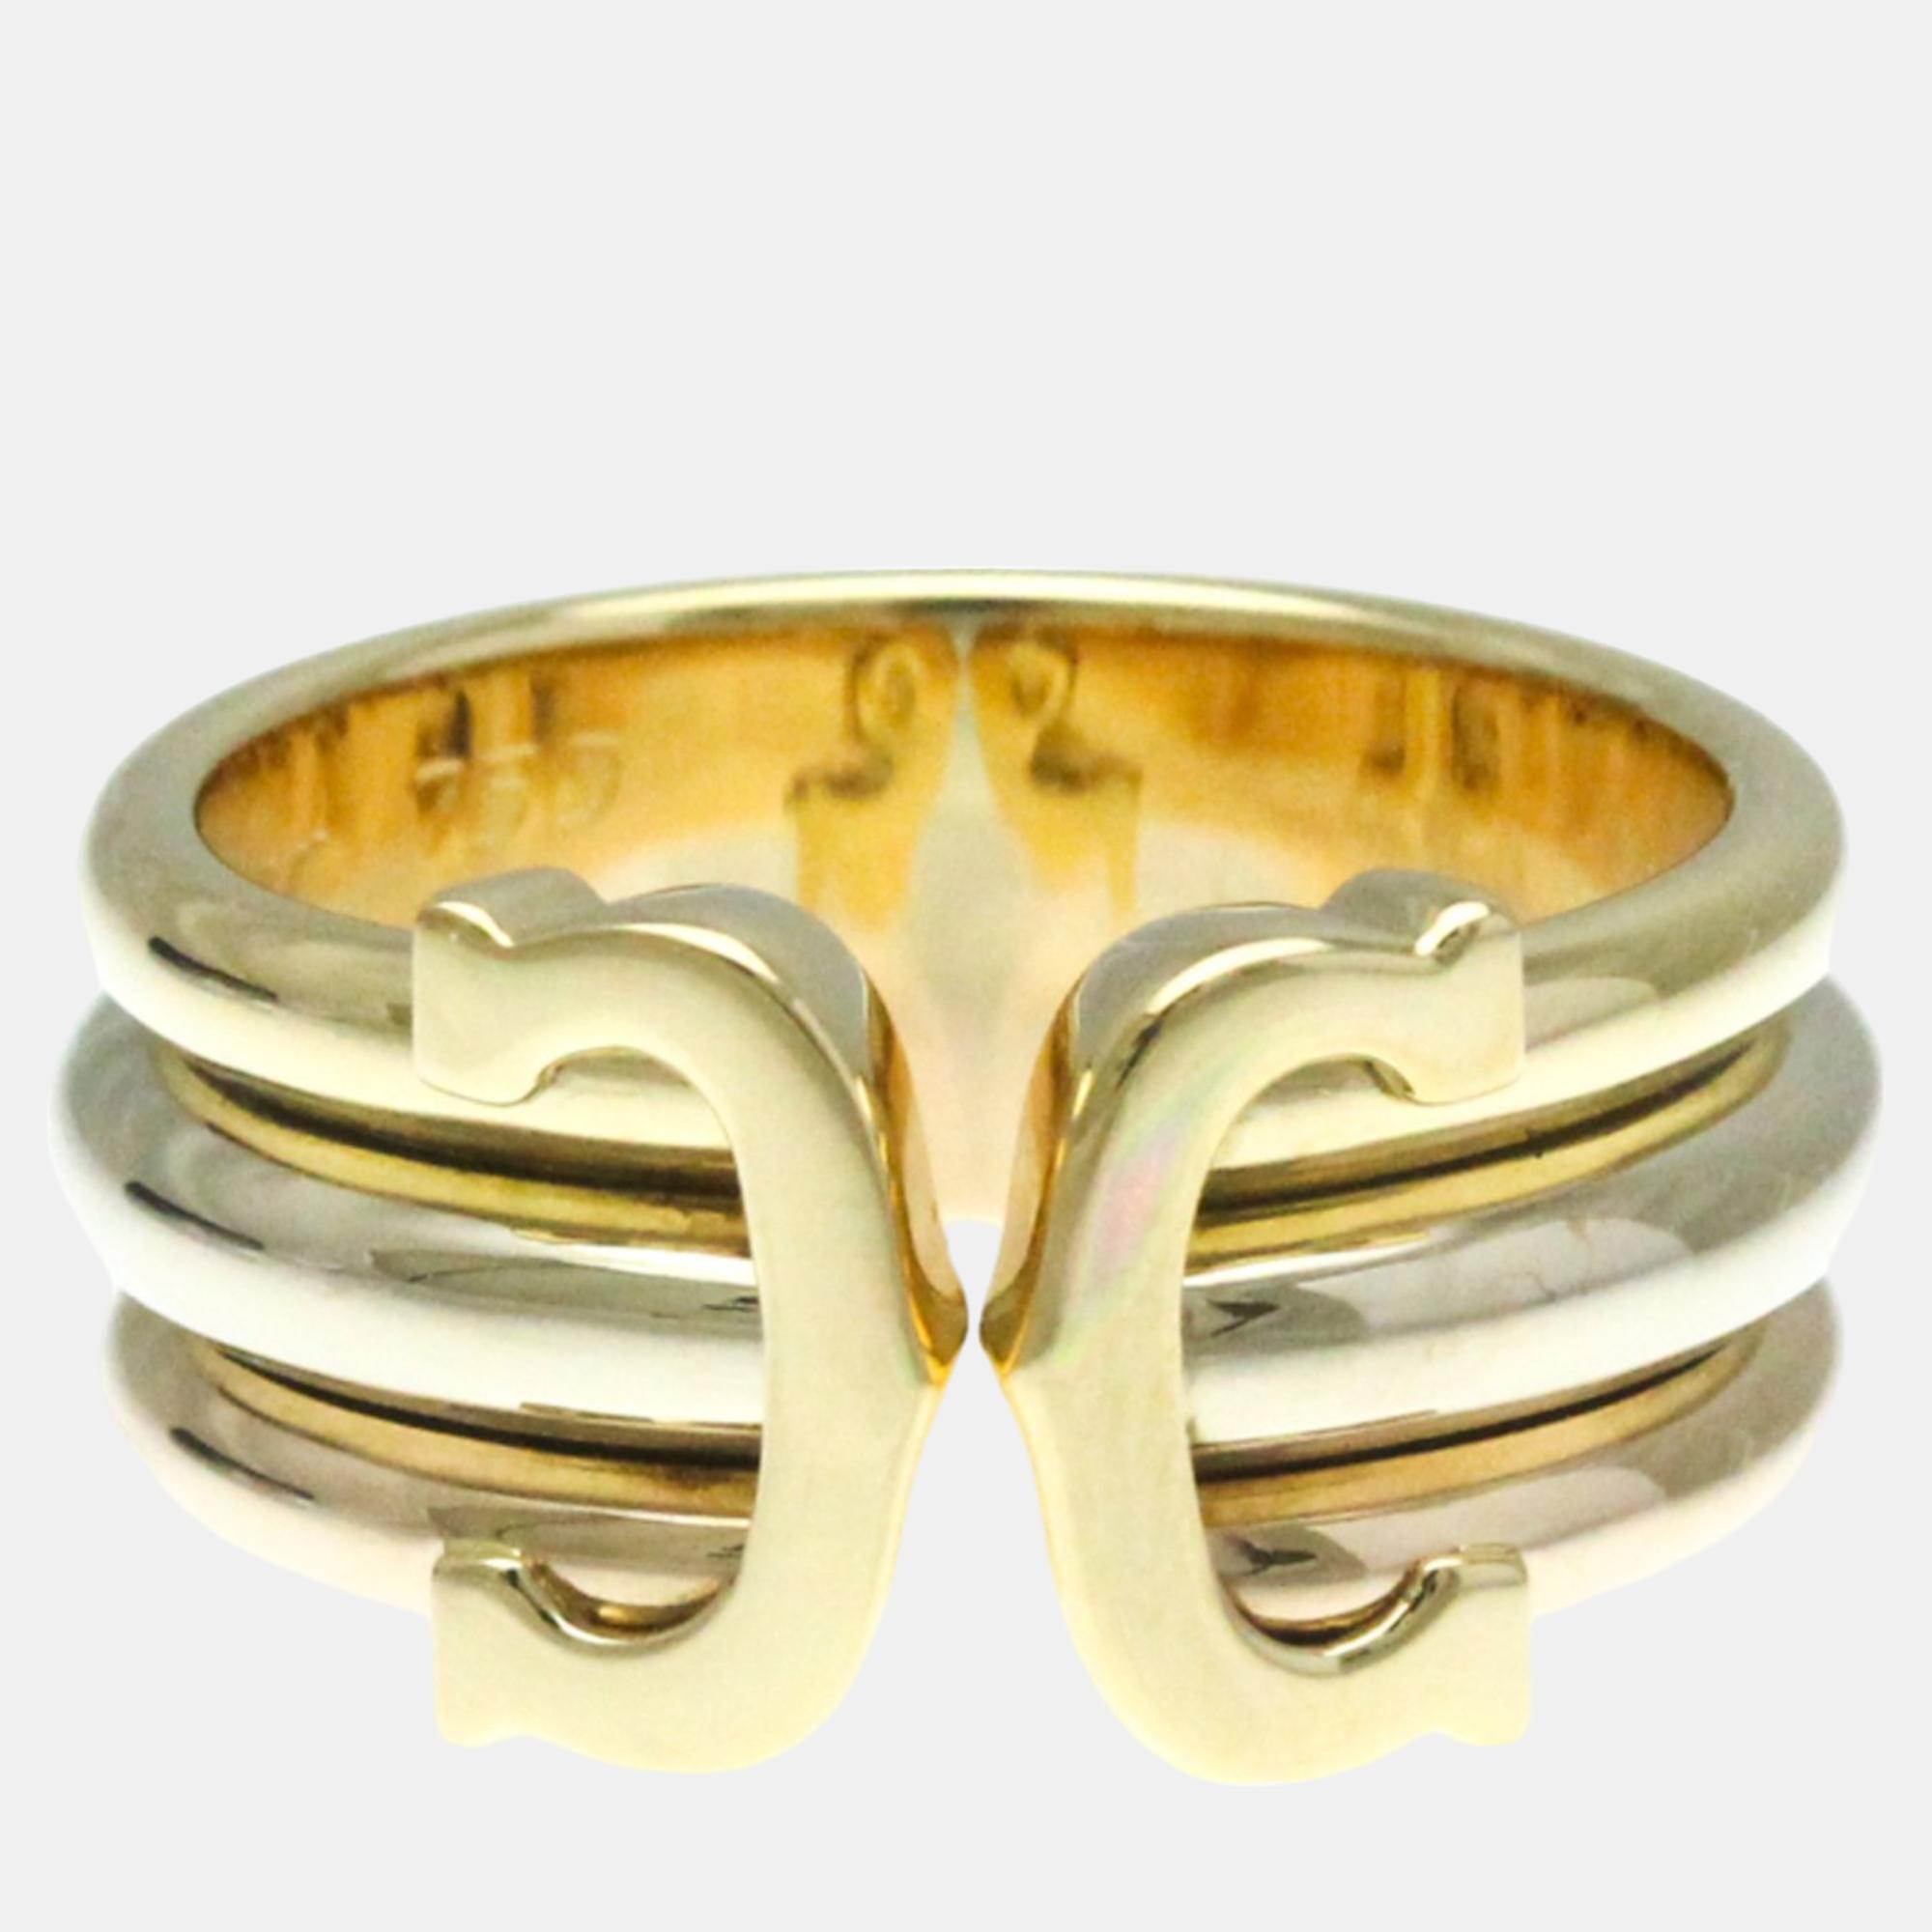 

Cartier 18K Yellow Gold, Rose Gold and White Gold C De Cartier Band Ring EU 54